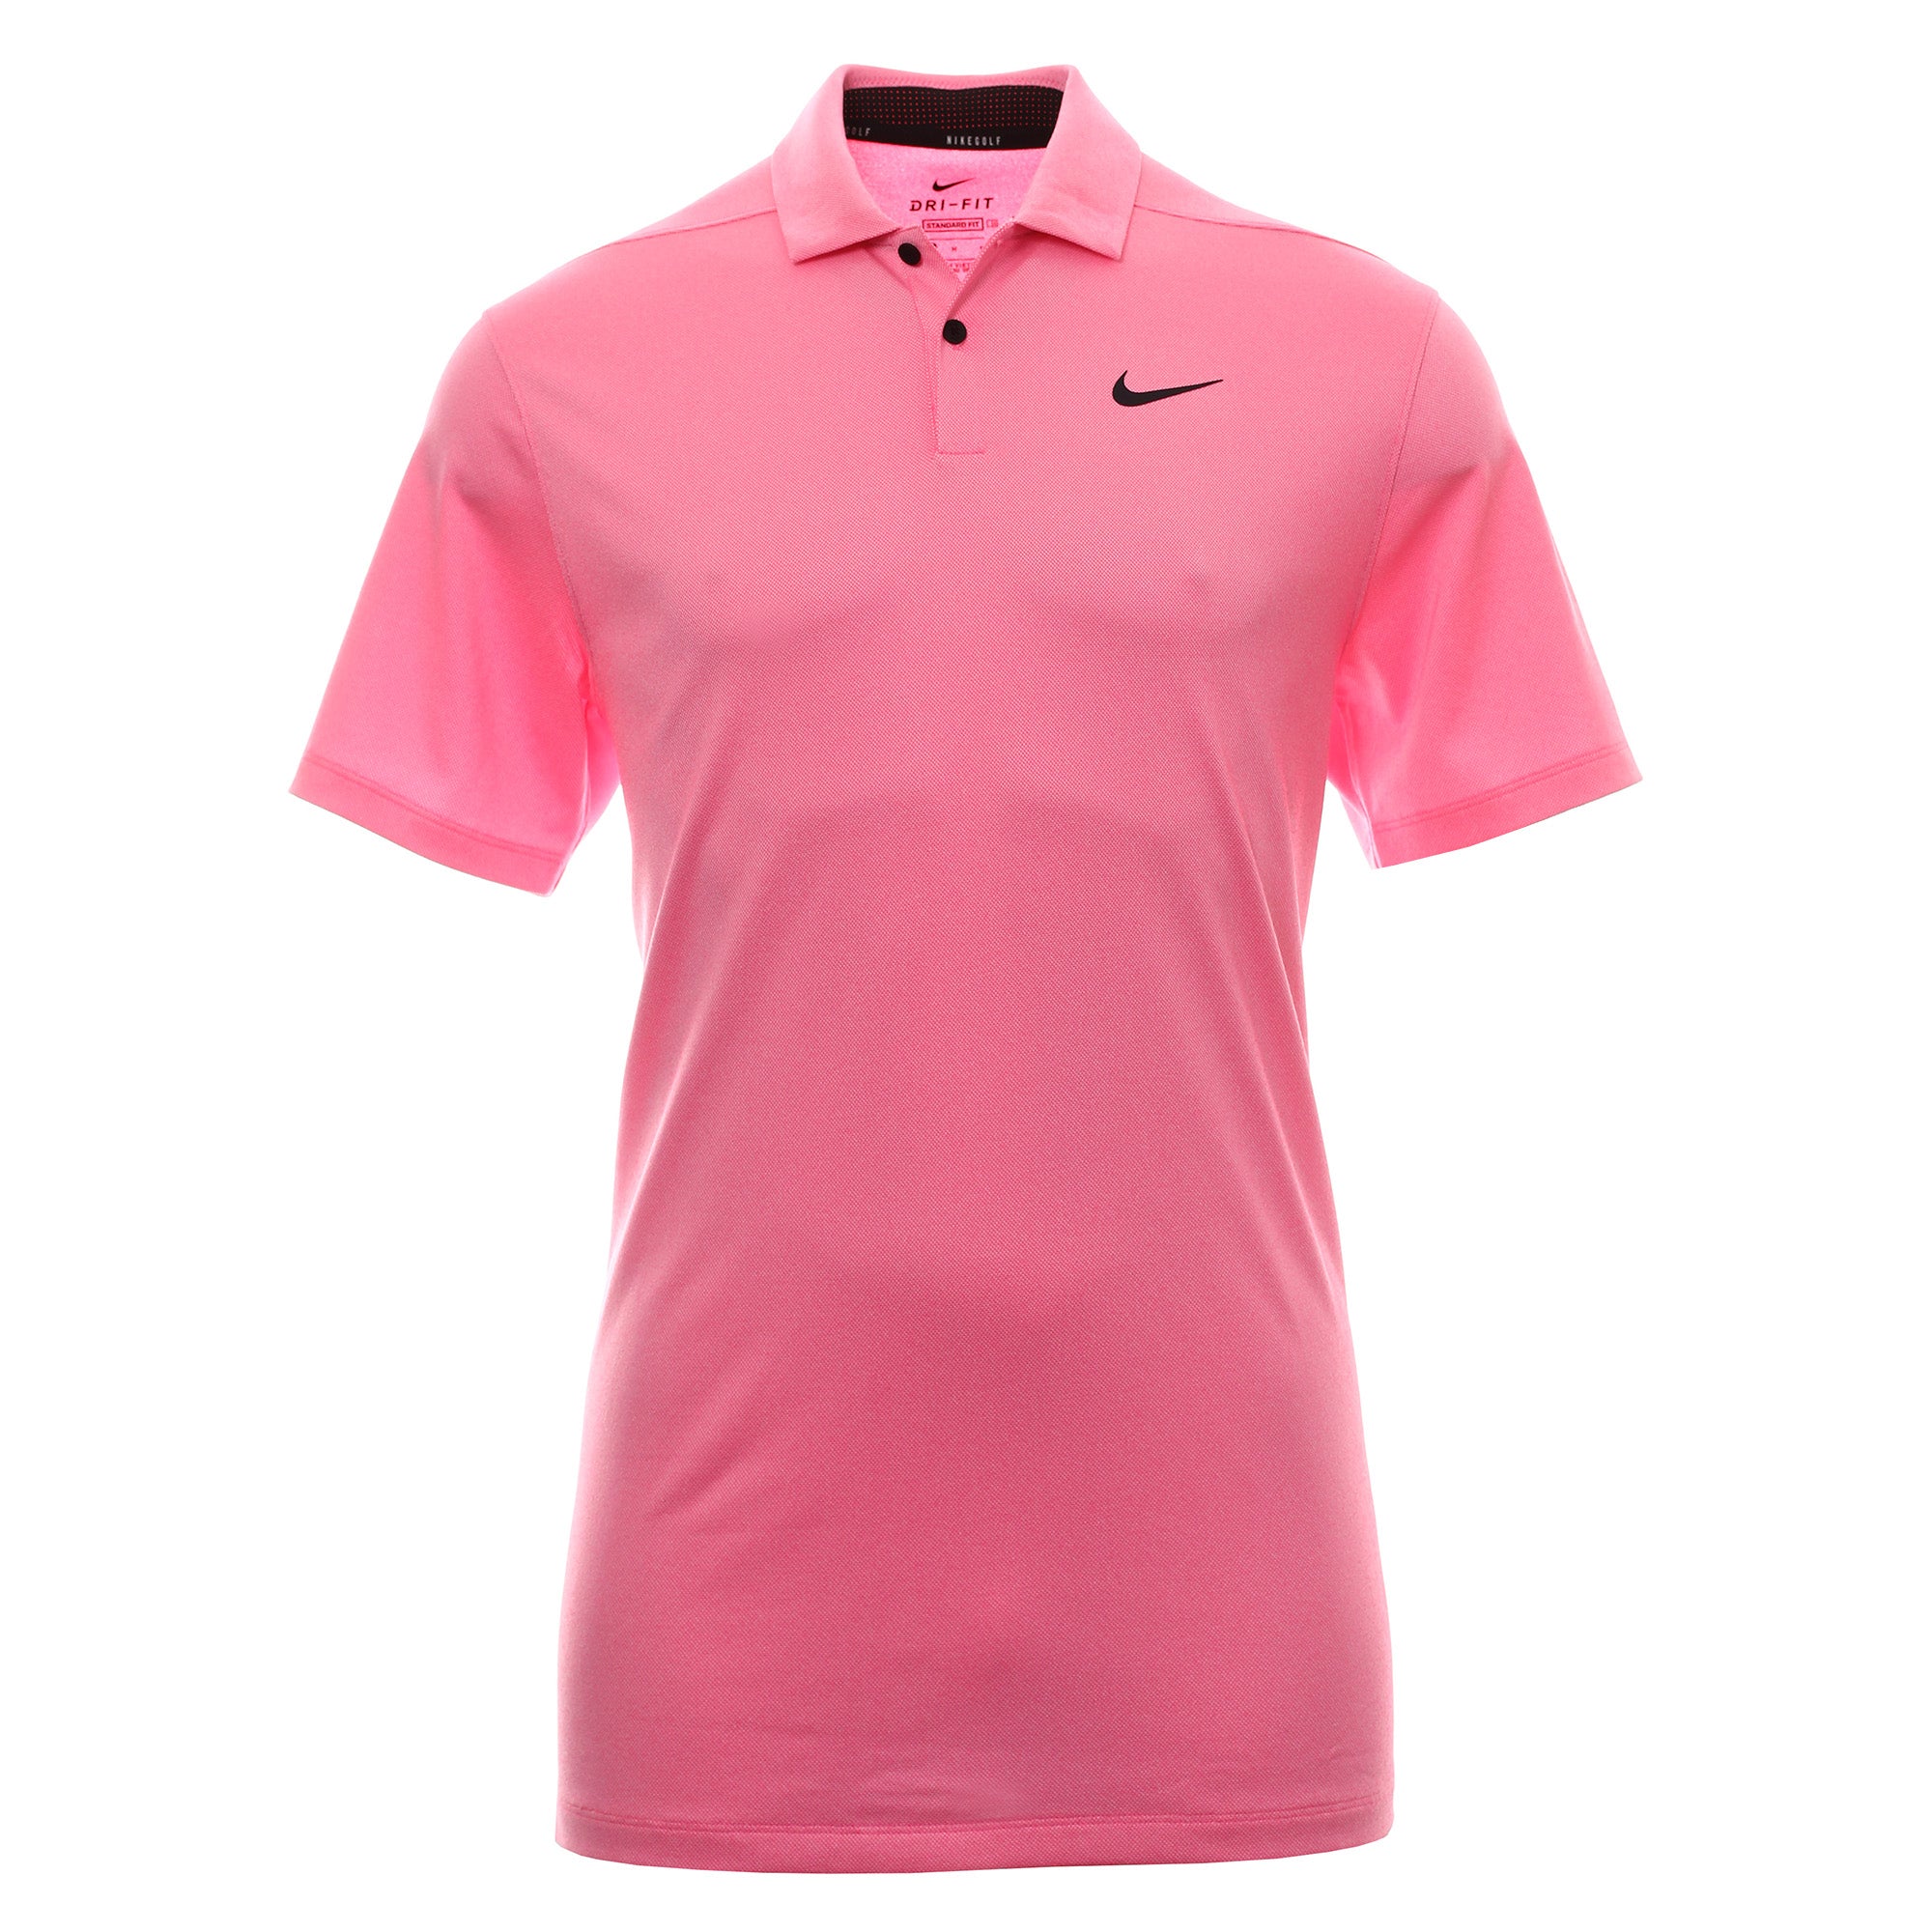 Nike Golf Dry Vapor Textured Shirt 